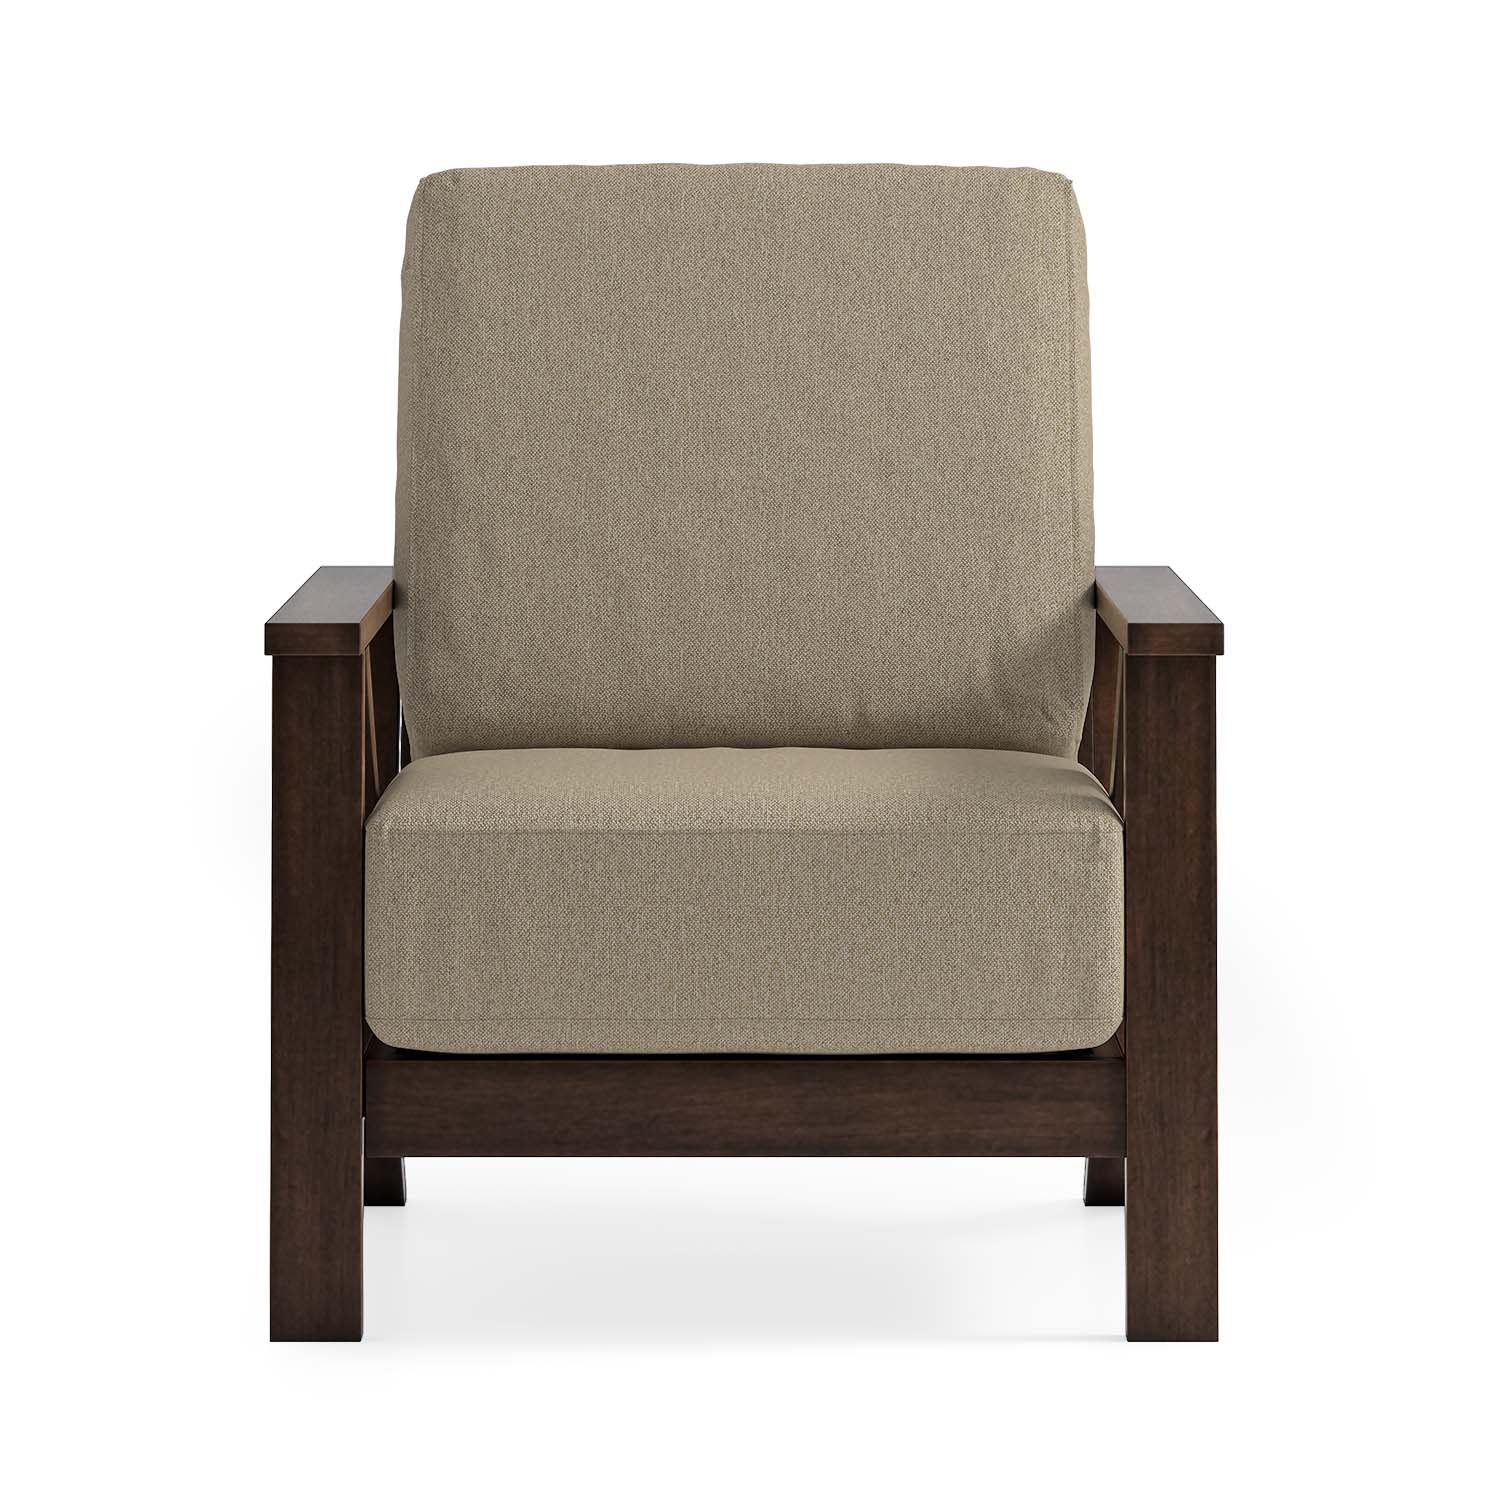 Neuwood Living Boardwalk Lounge Chair